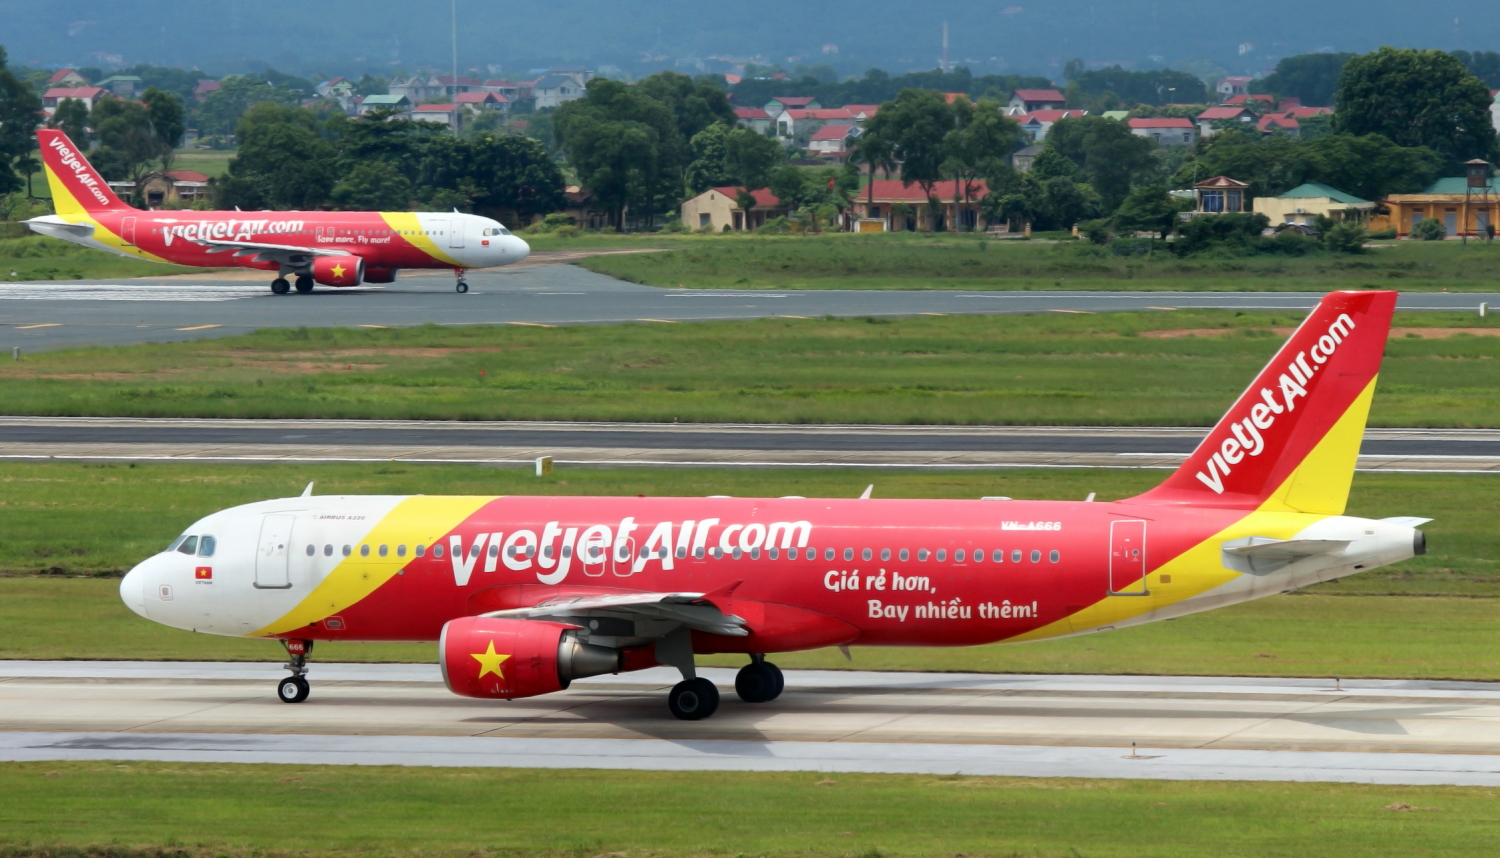 Vietjet Aircraft at Tan Son Nhat Airport. Click to enlarge.